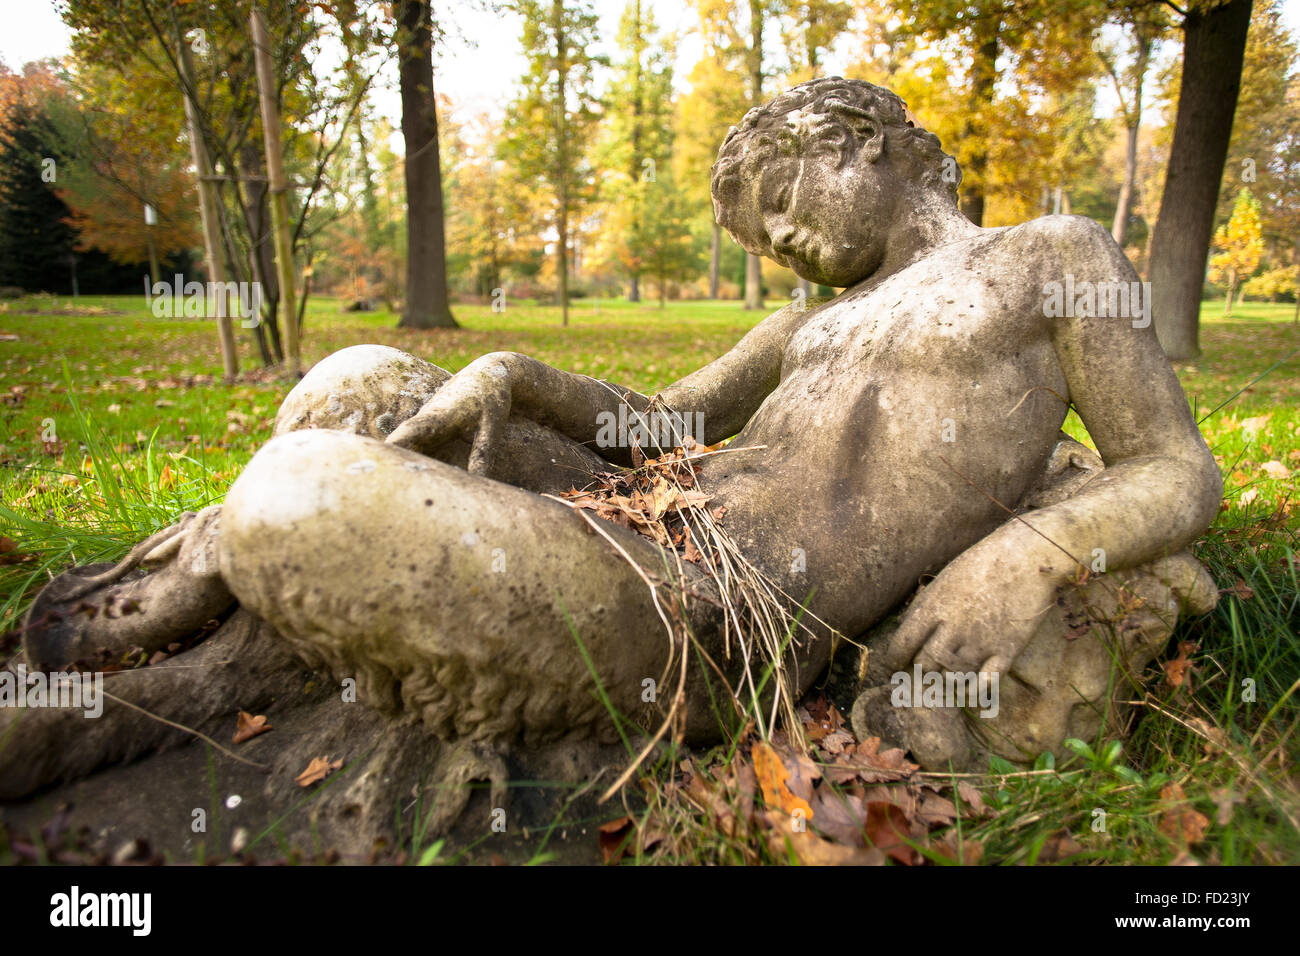 Europe, Germany, North Rhine-Westphalia, Lower Rhine Region, sculpture of a sleeping boy in a garden. Stock Photo